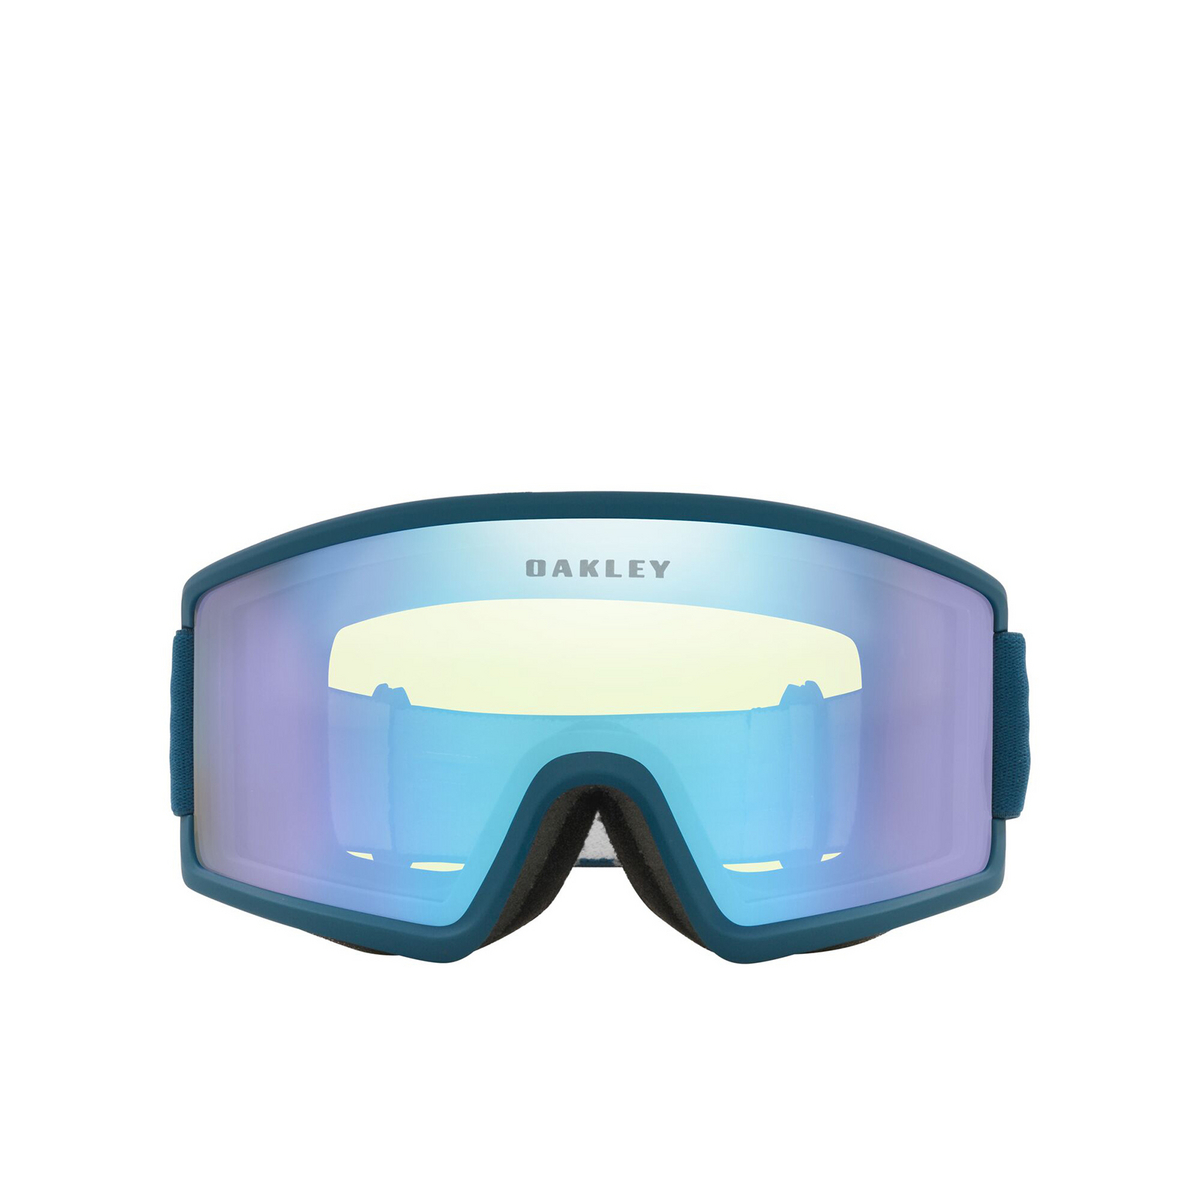 Oakley TARGET LINE L Sunglasses 712010 Poseidon - front view